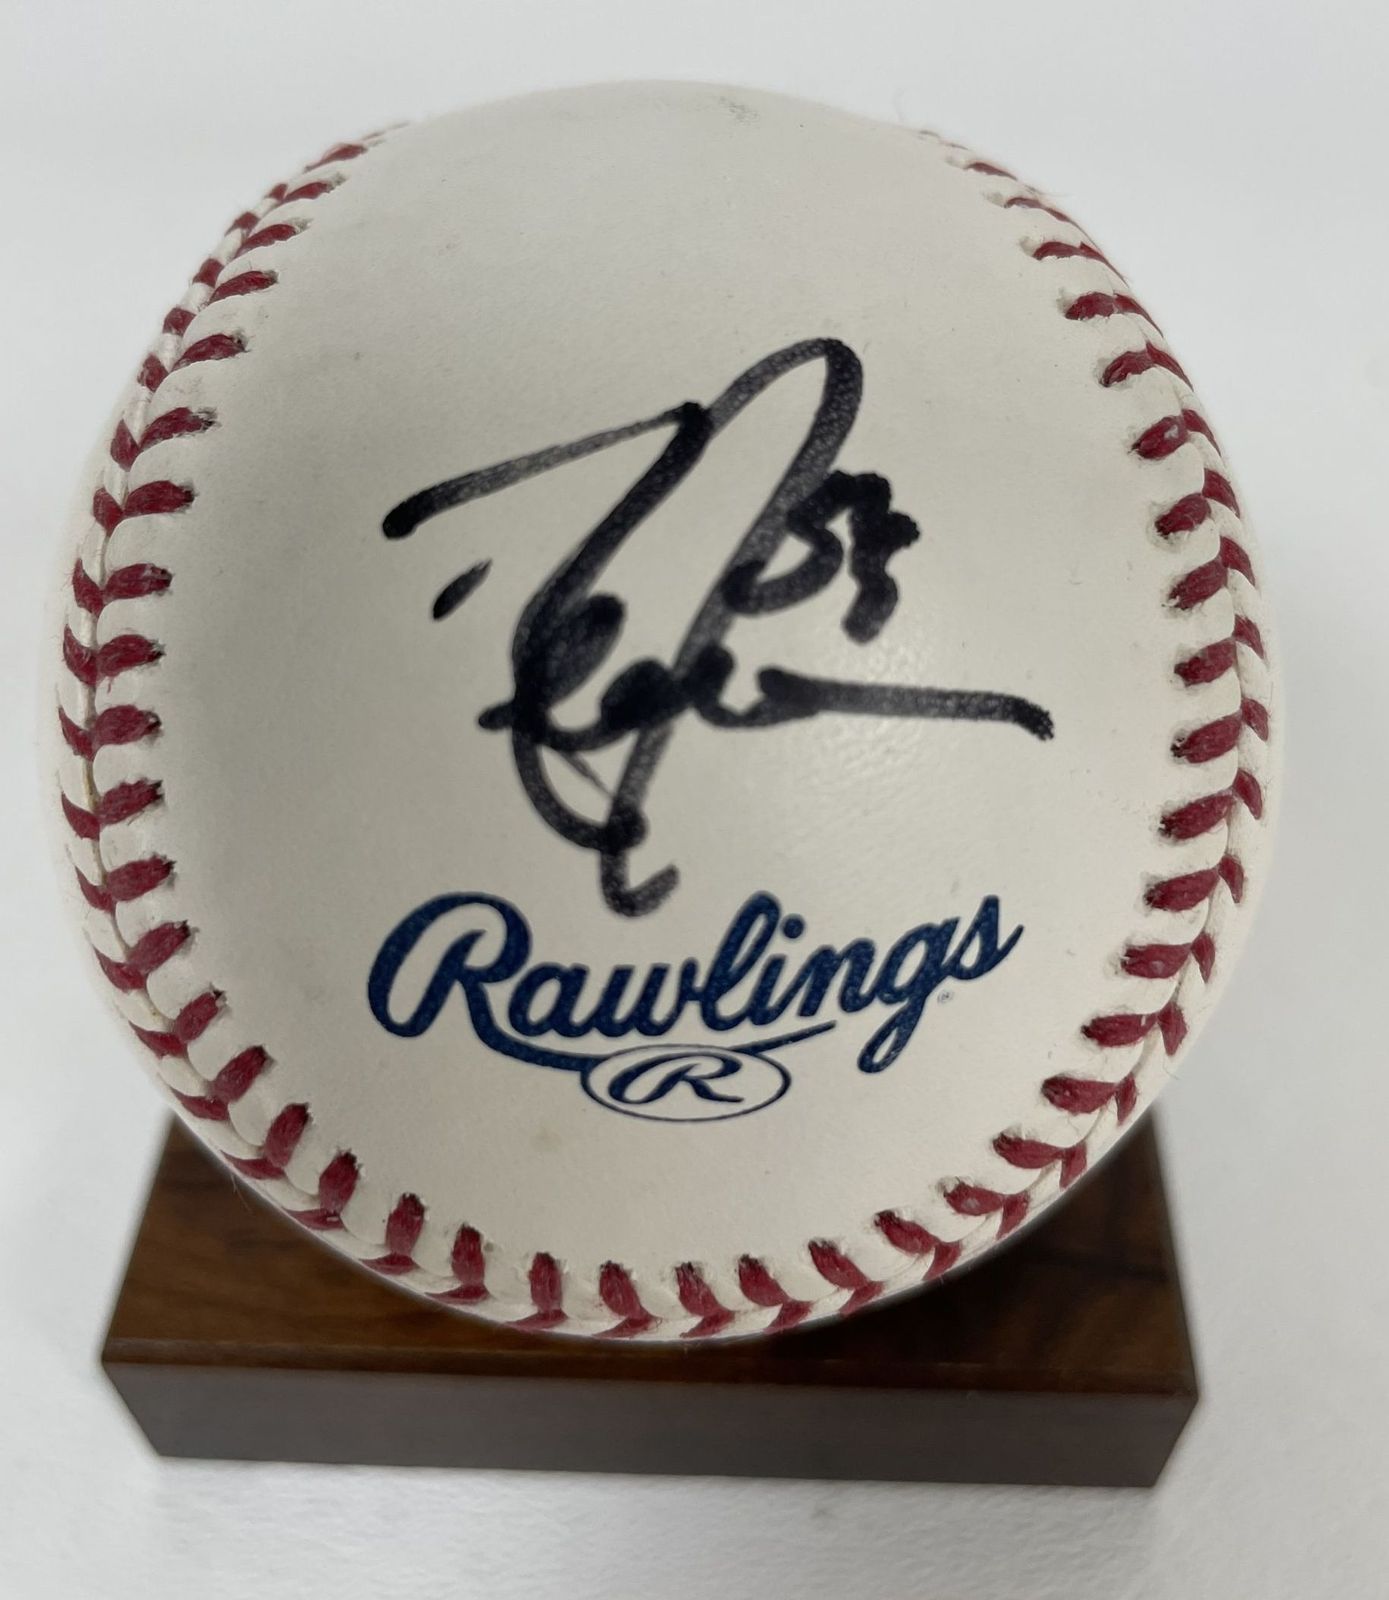 Jose Reyes Autographed Signed Official MLB Major League Baseball